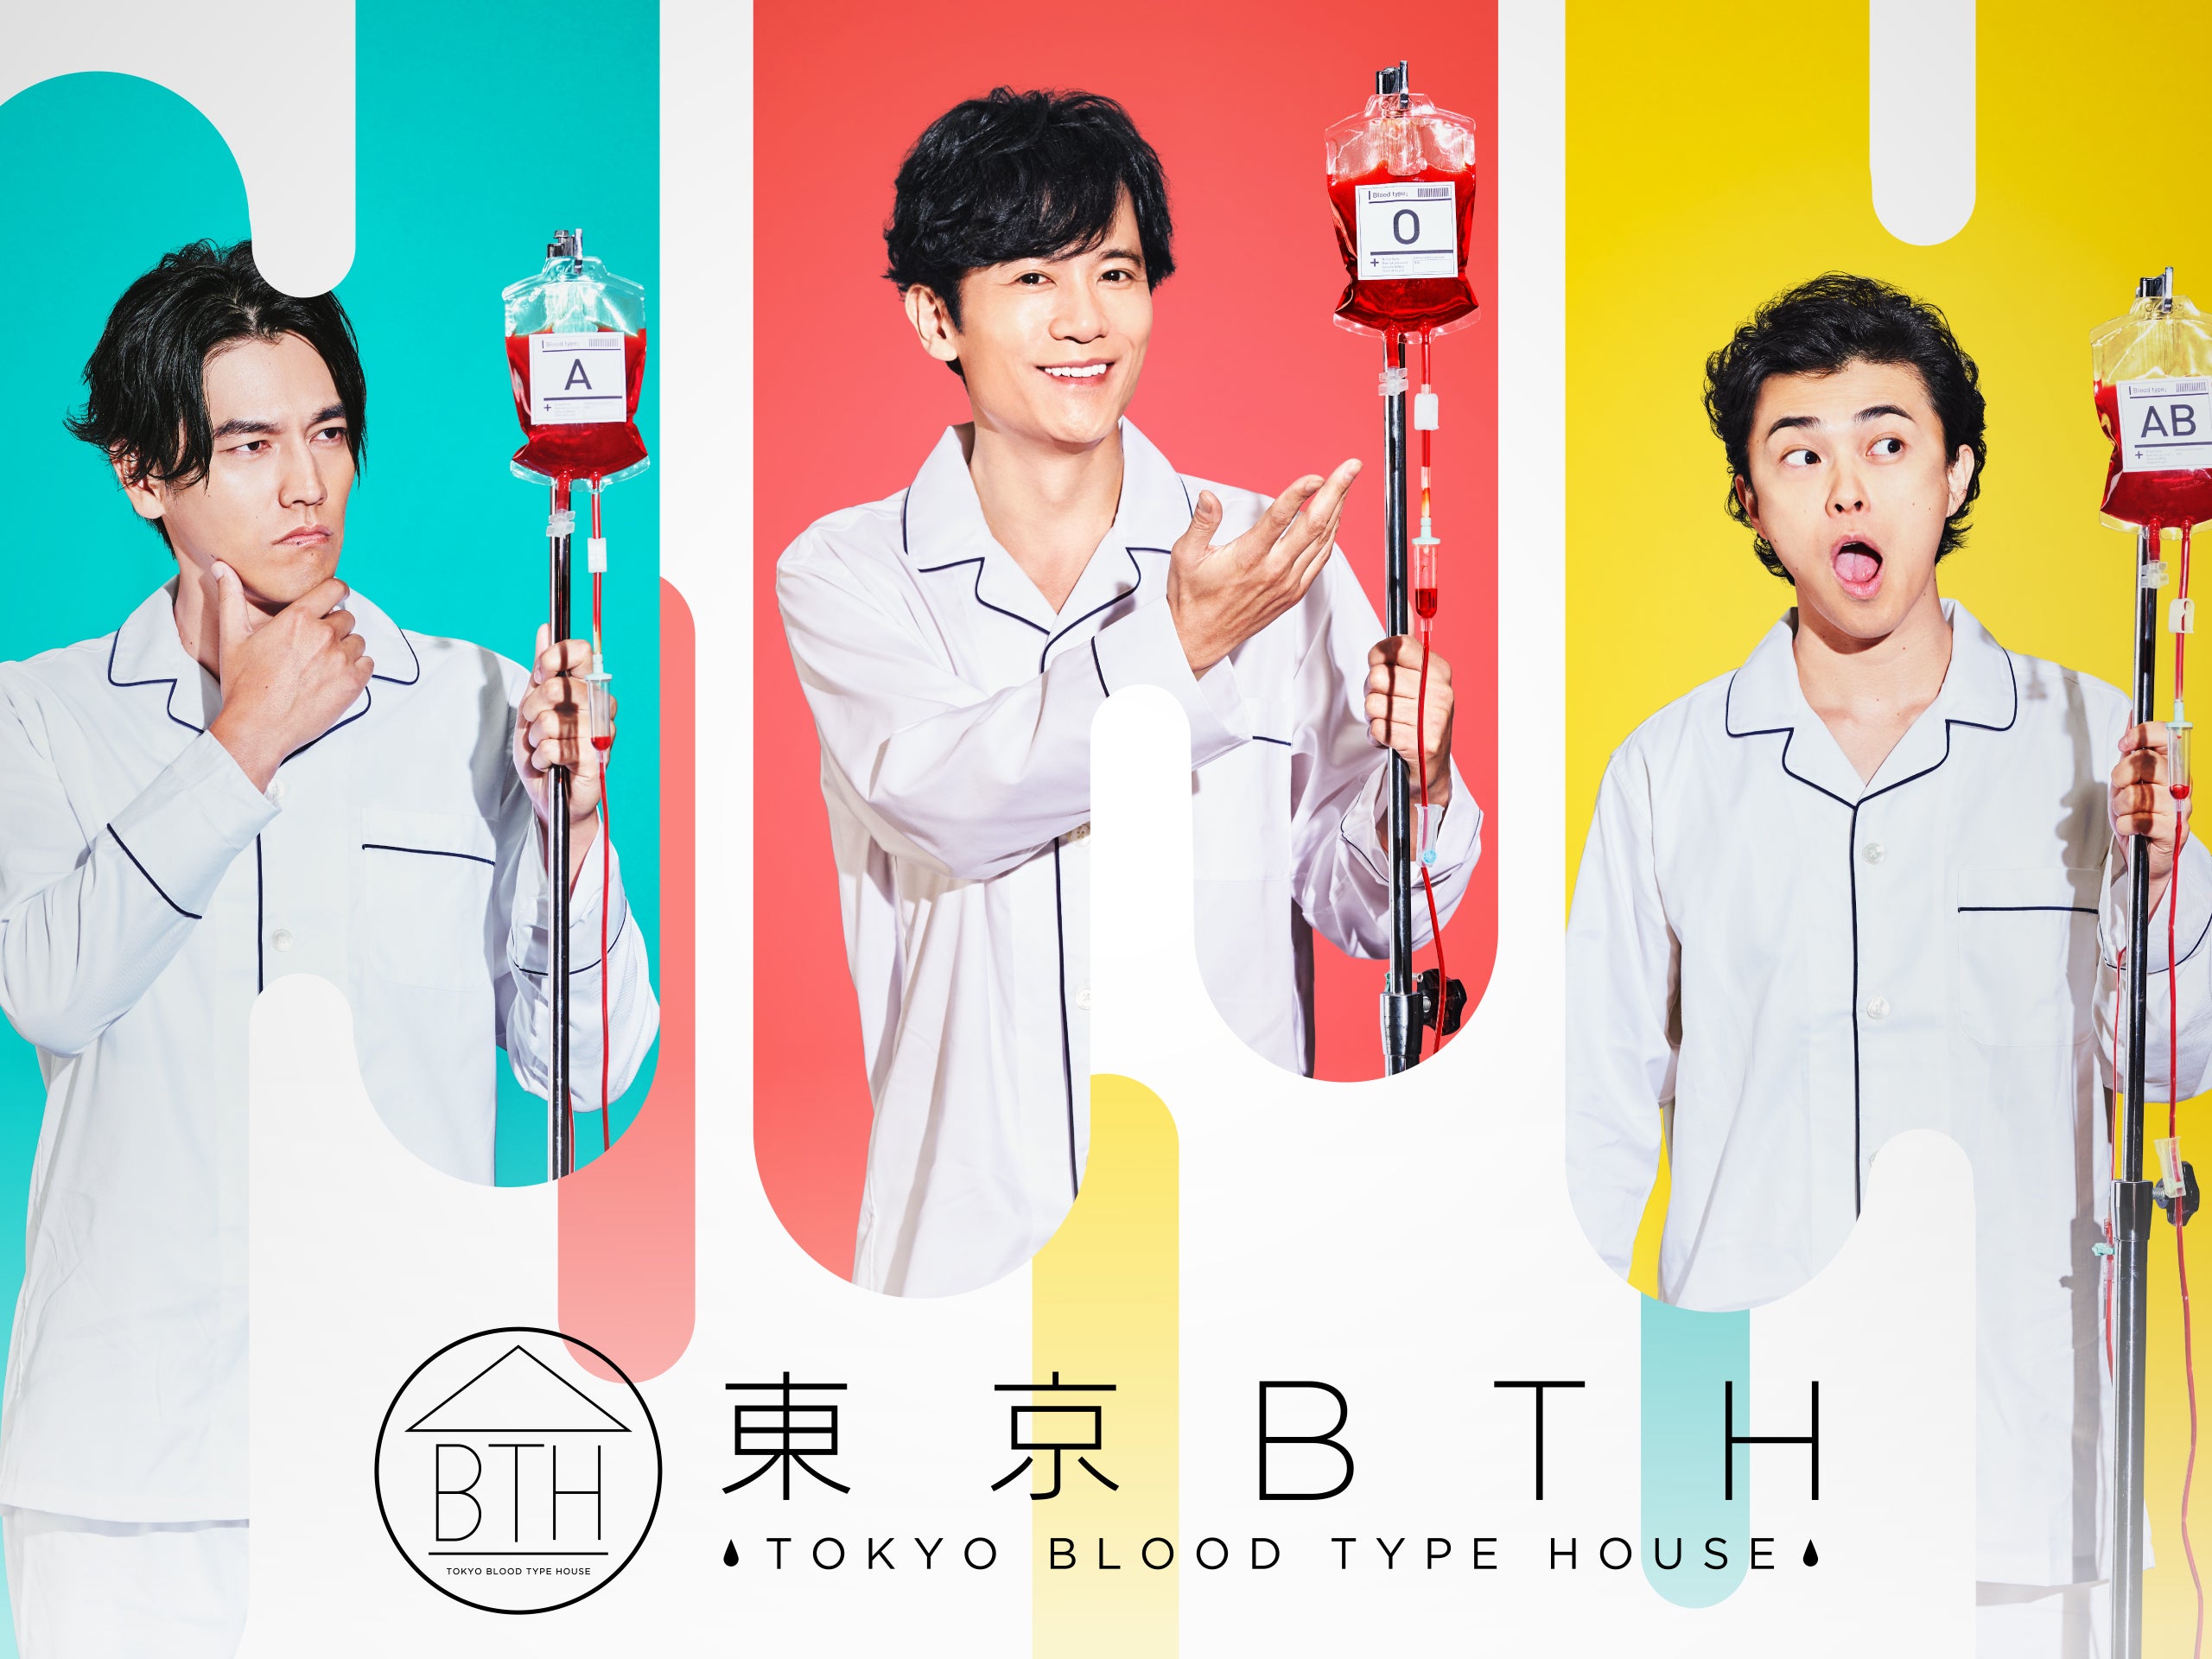 TV ratings for Tokyo Bth: Tokyo Blood Type House (東京BTH〜TOKYO BLOOD TYPE HOUSE〜) in India. Amazon Prime Video TV series